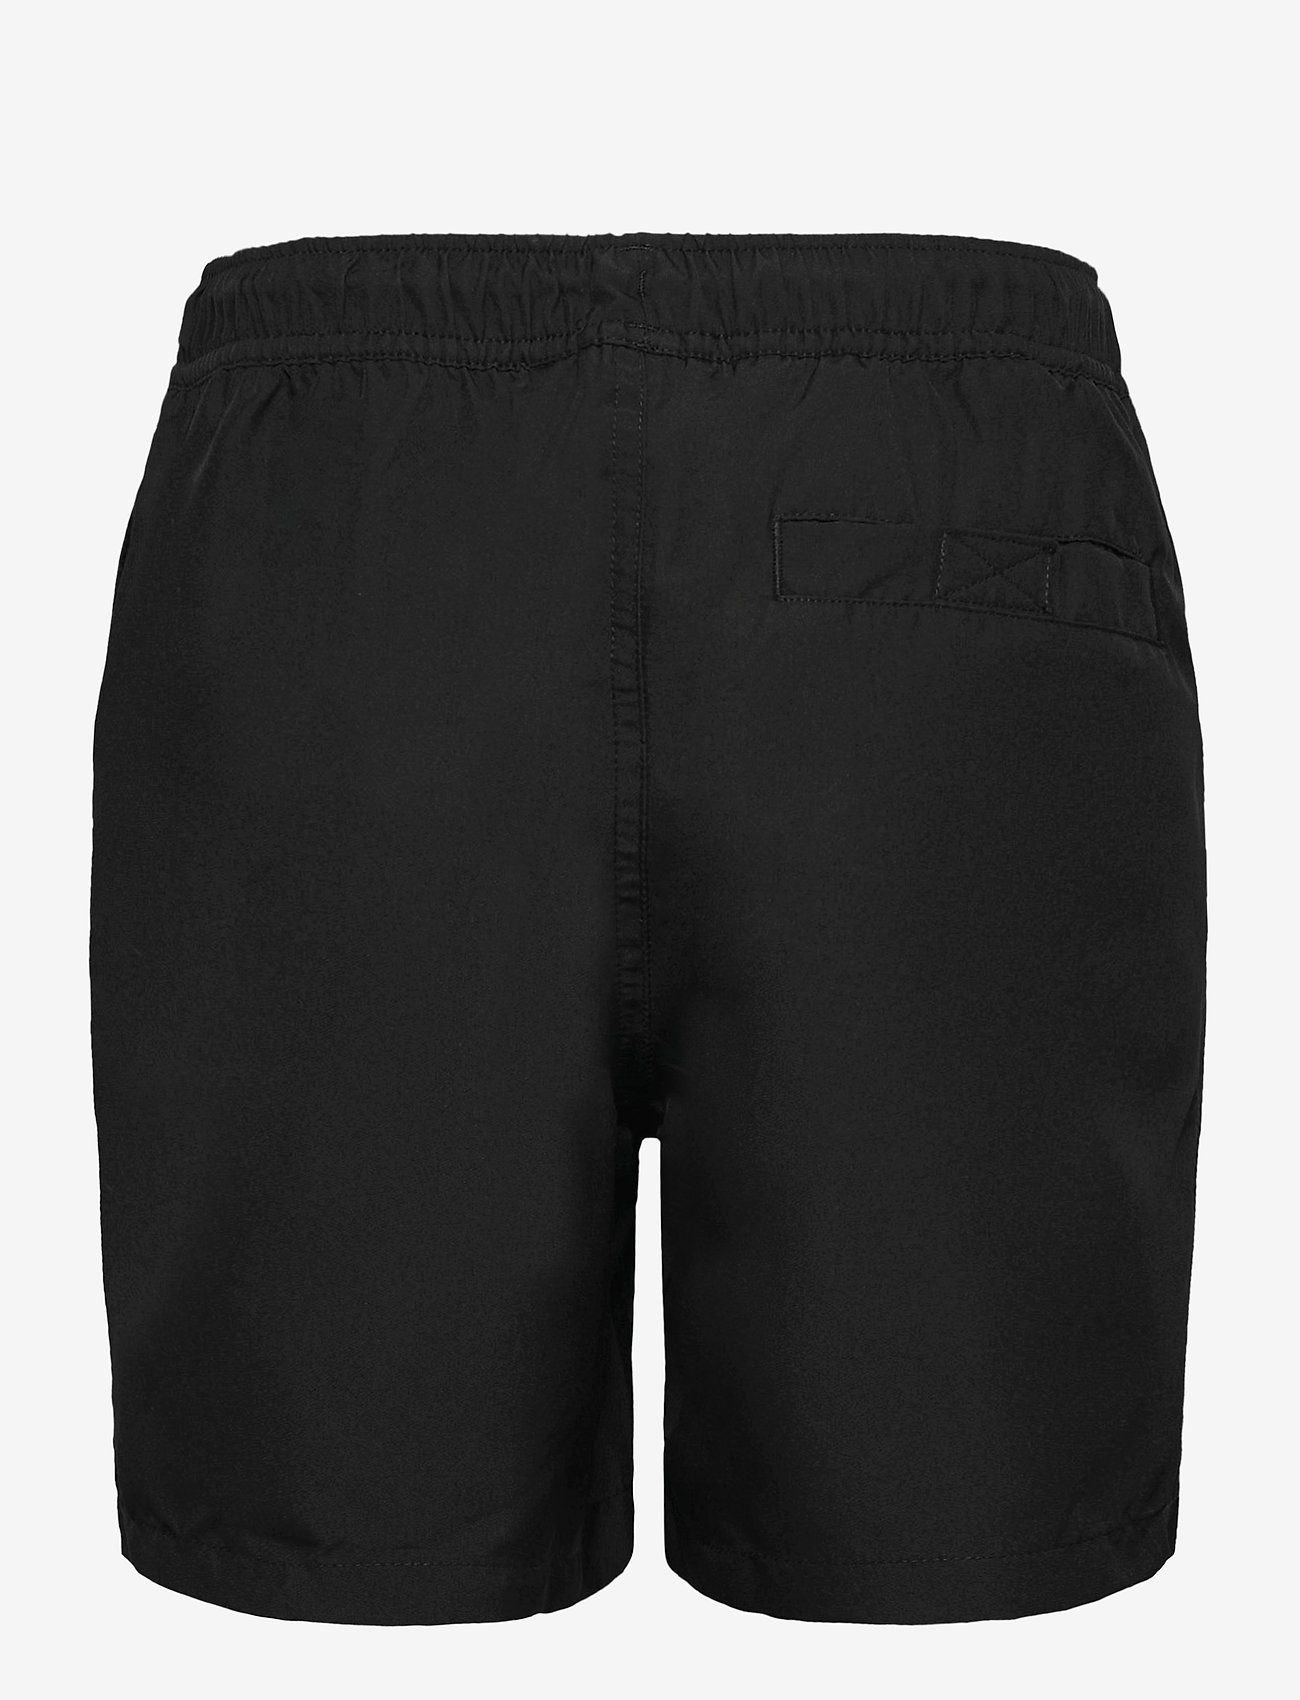 Björn Borg - BORG SWIM SHORTS - shorts - black beauty - 1